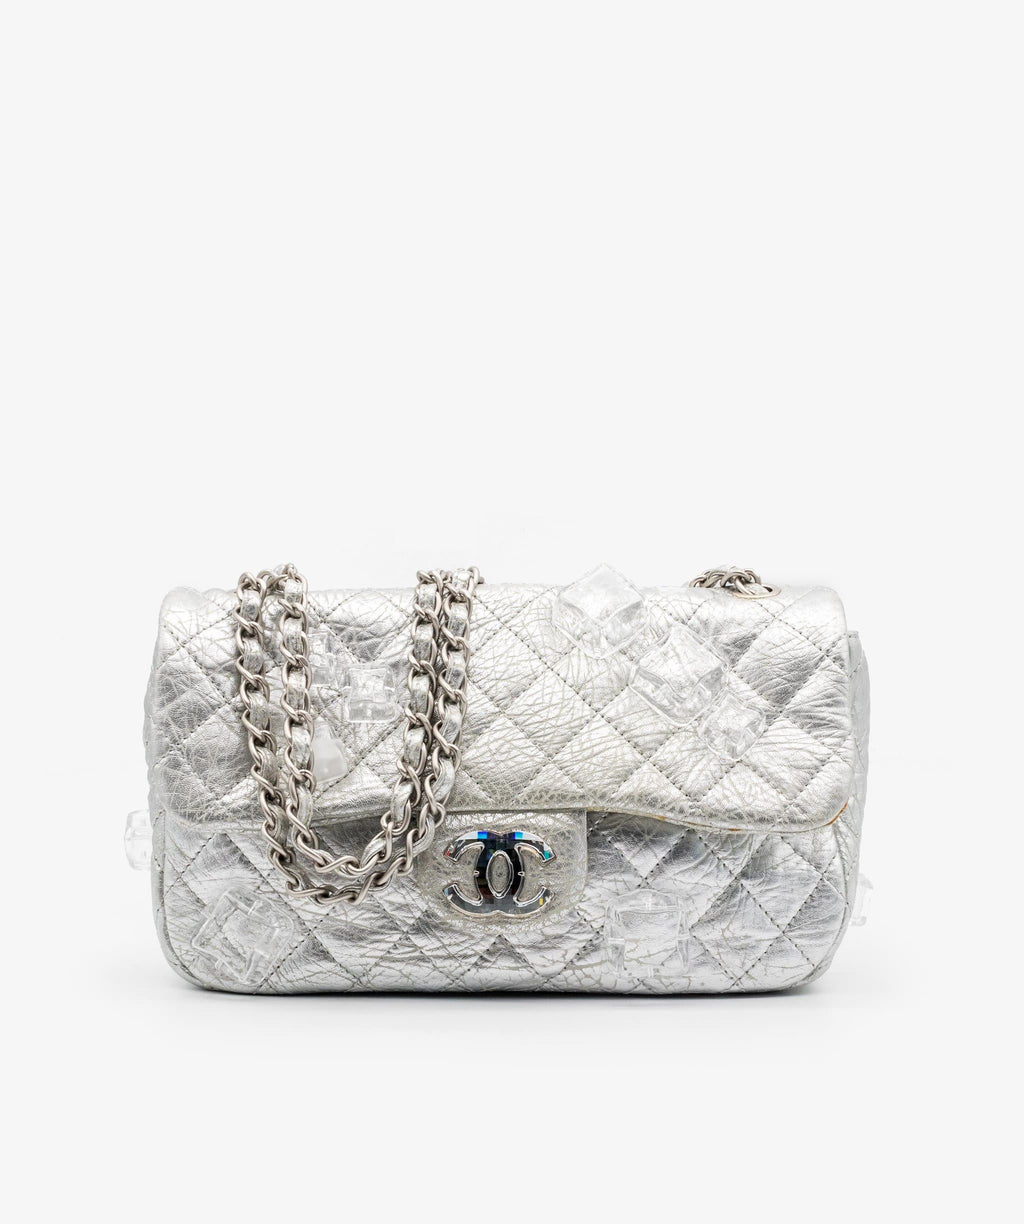 Chanel Metallic Silver Double Flap Handbag